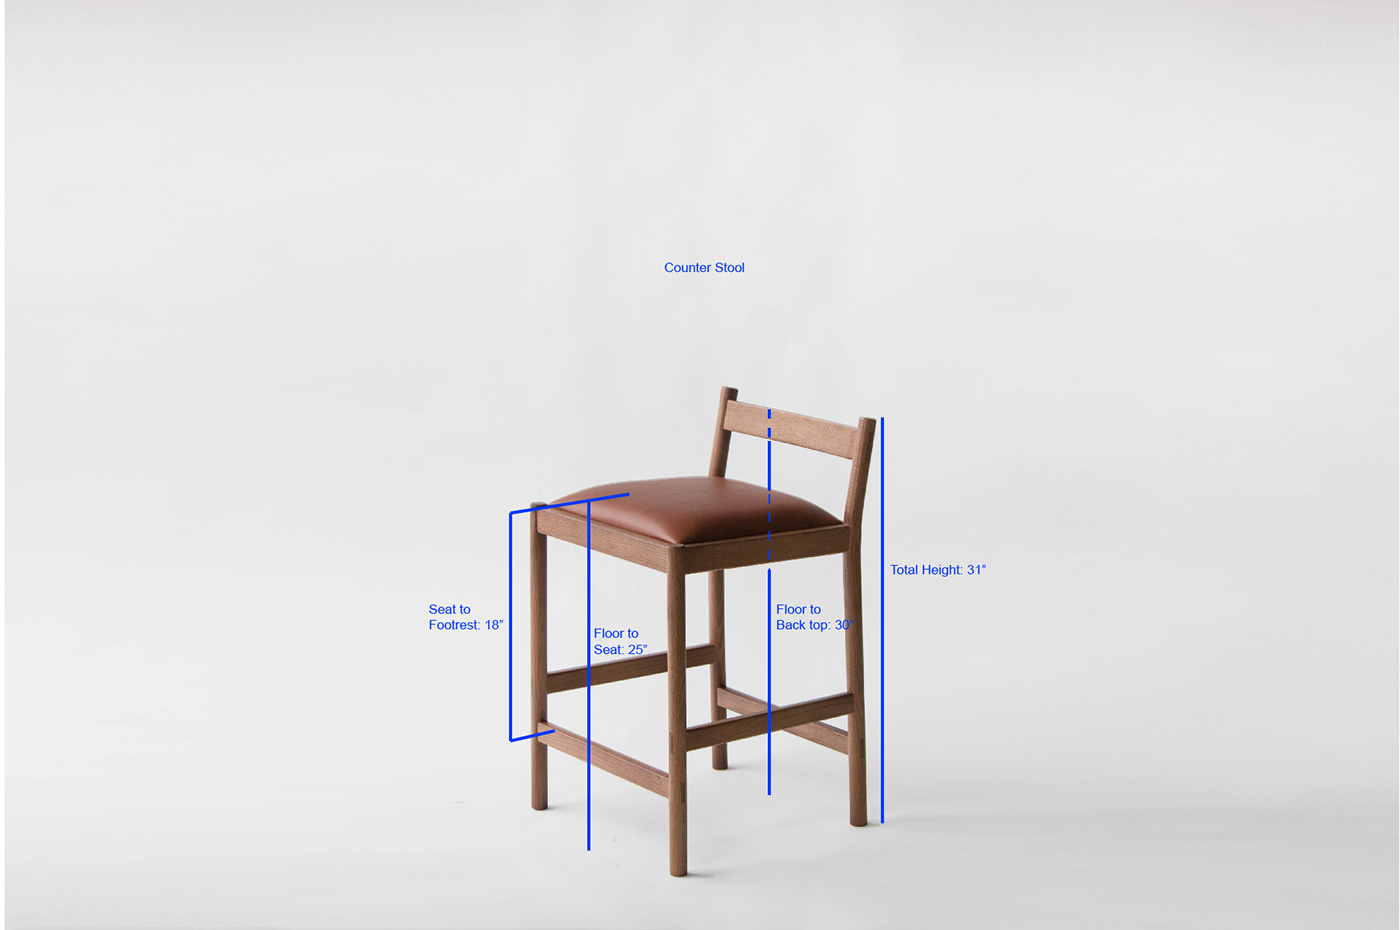 3D counter stool design furniture industrial product design  Render